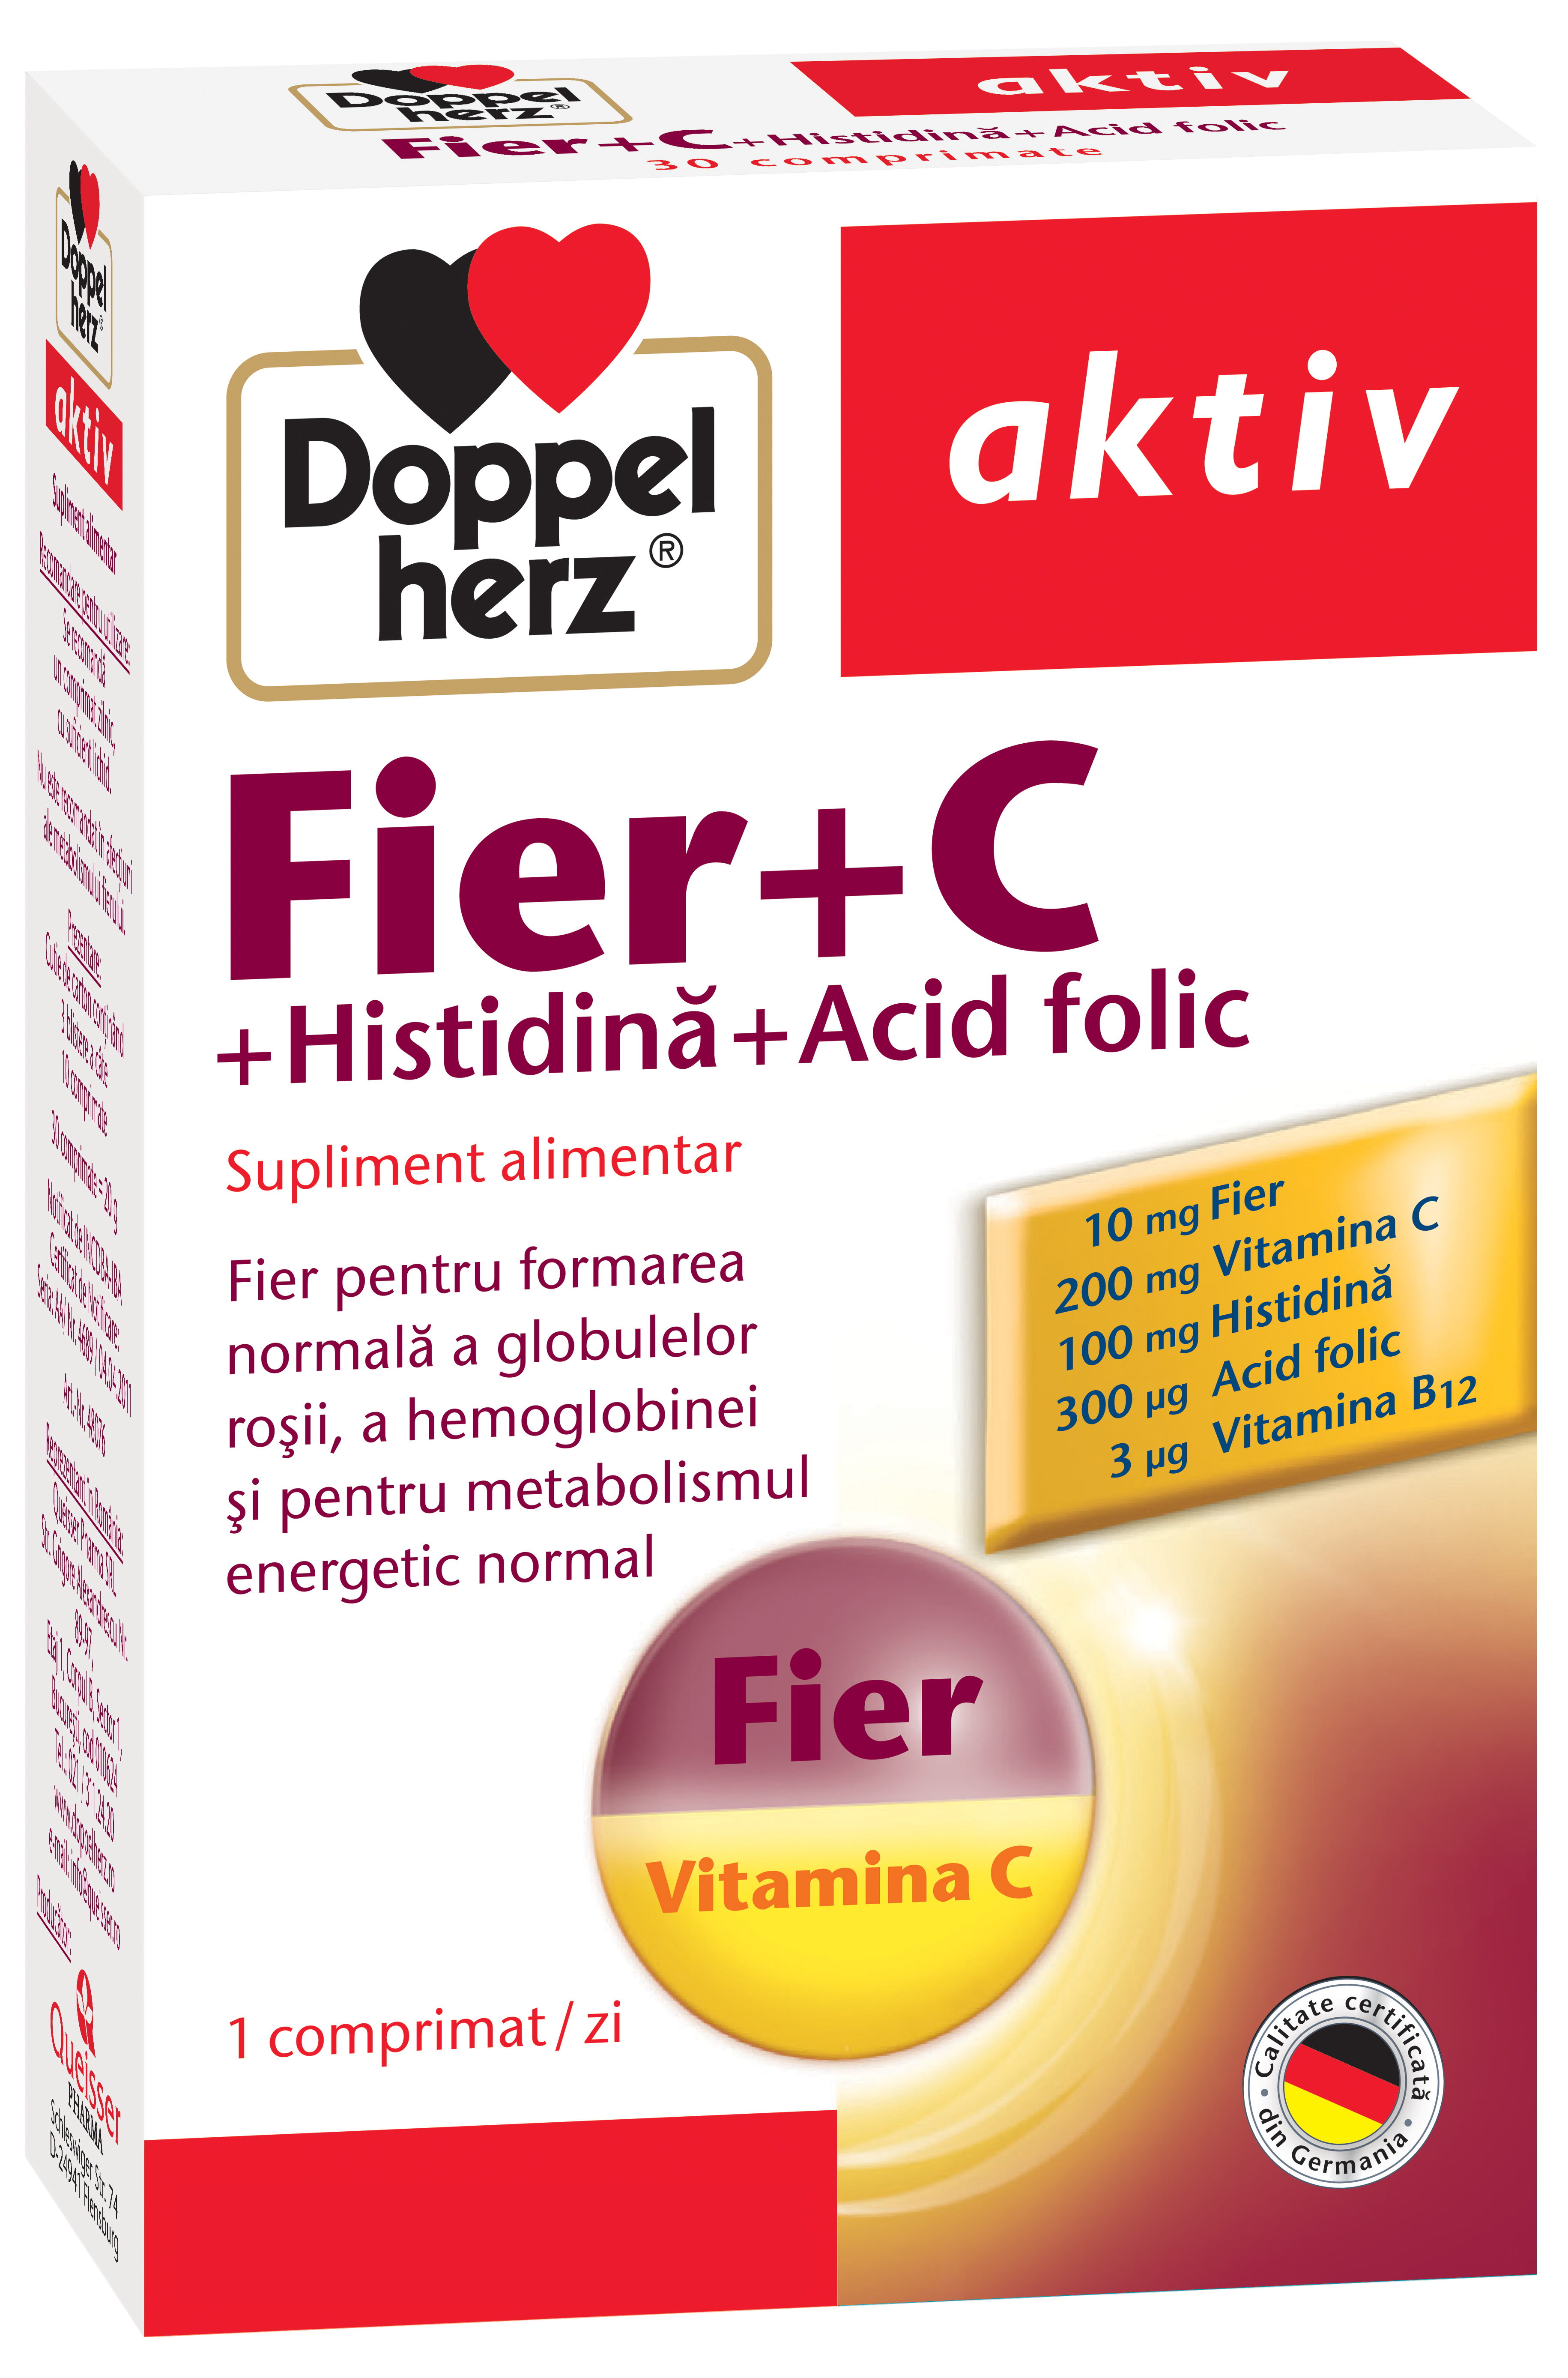 Multivitamine si minerale - Doppelherz aktiv Fier + Vitamina C + Histidina + Acid Folic x 30 comprimate, medik-on.ro